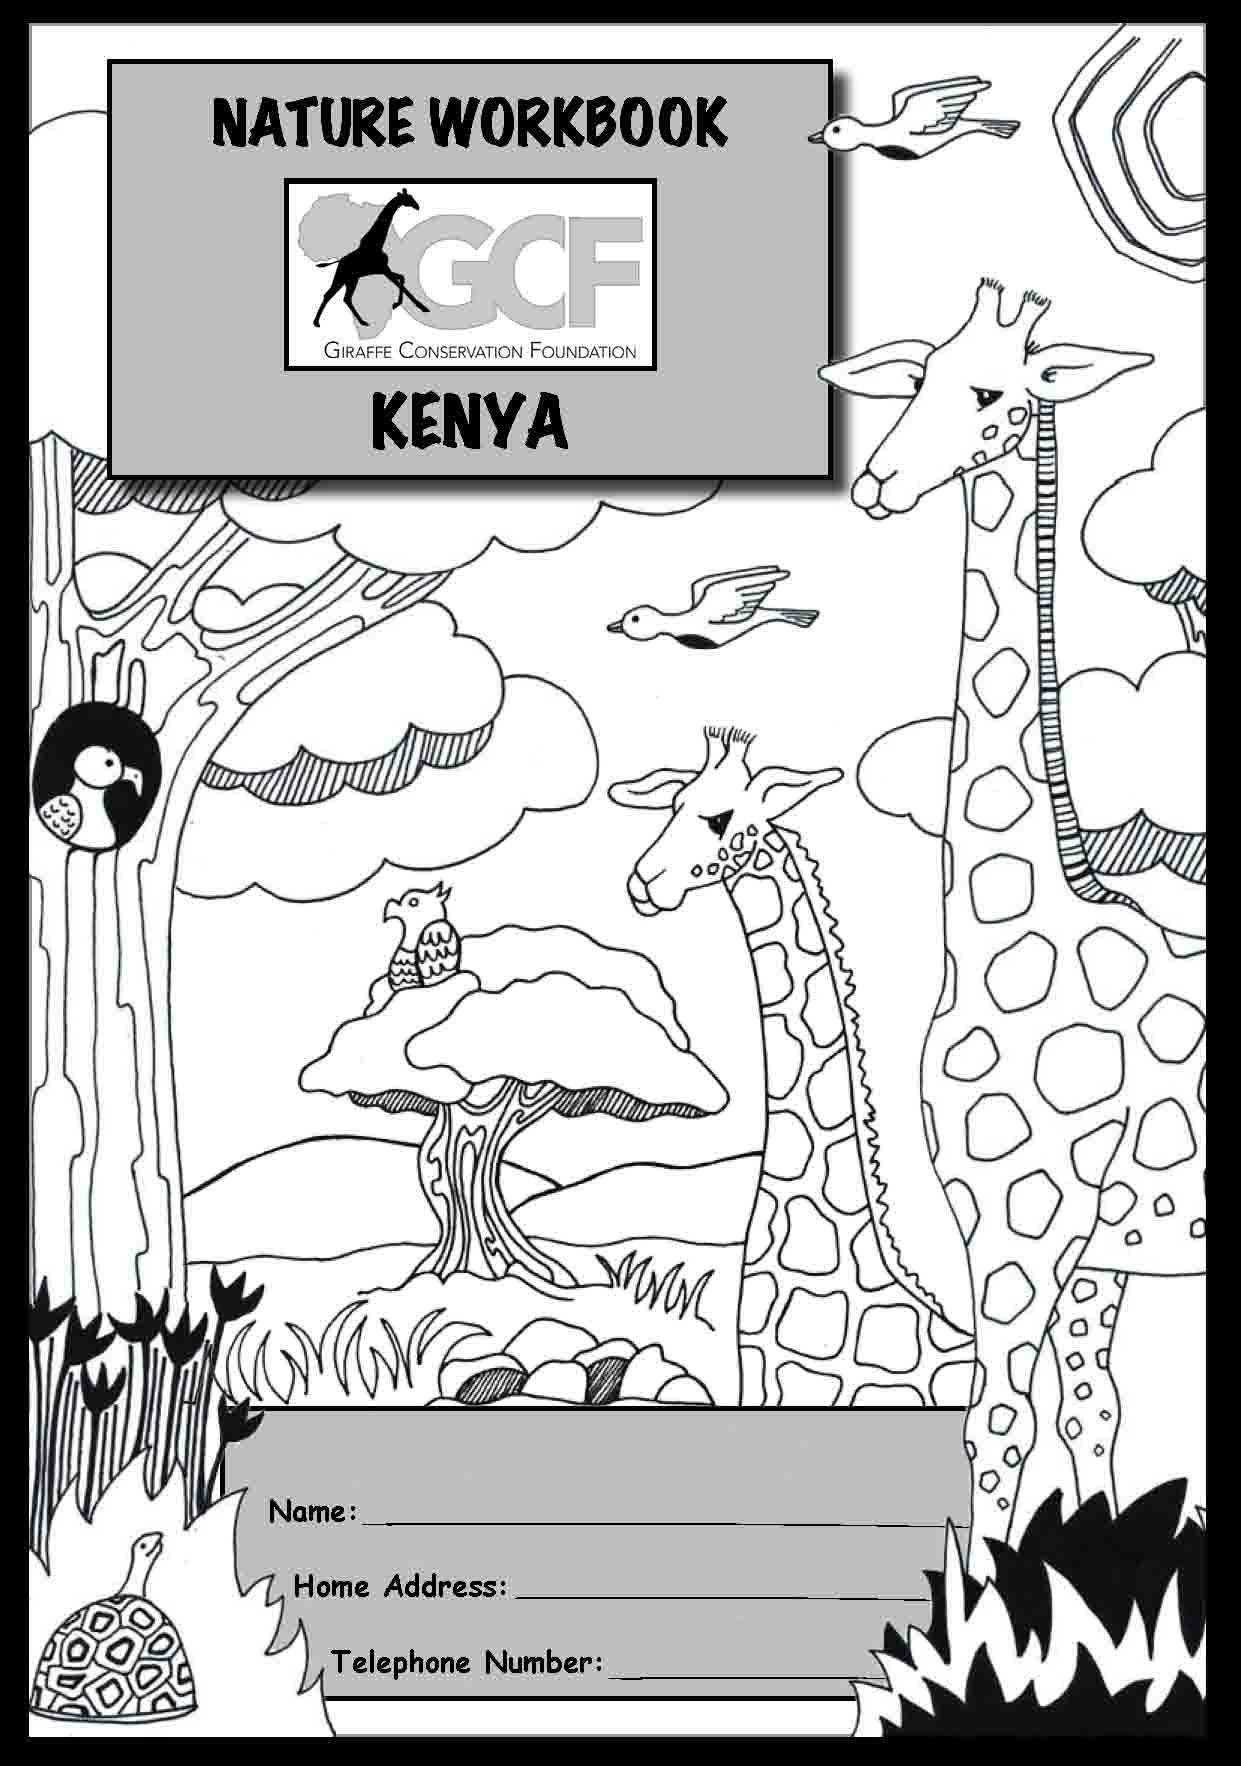 Nature Workbook – Kenya